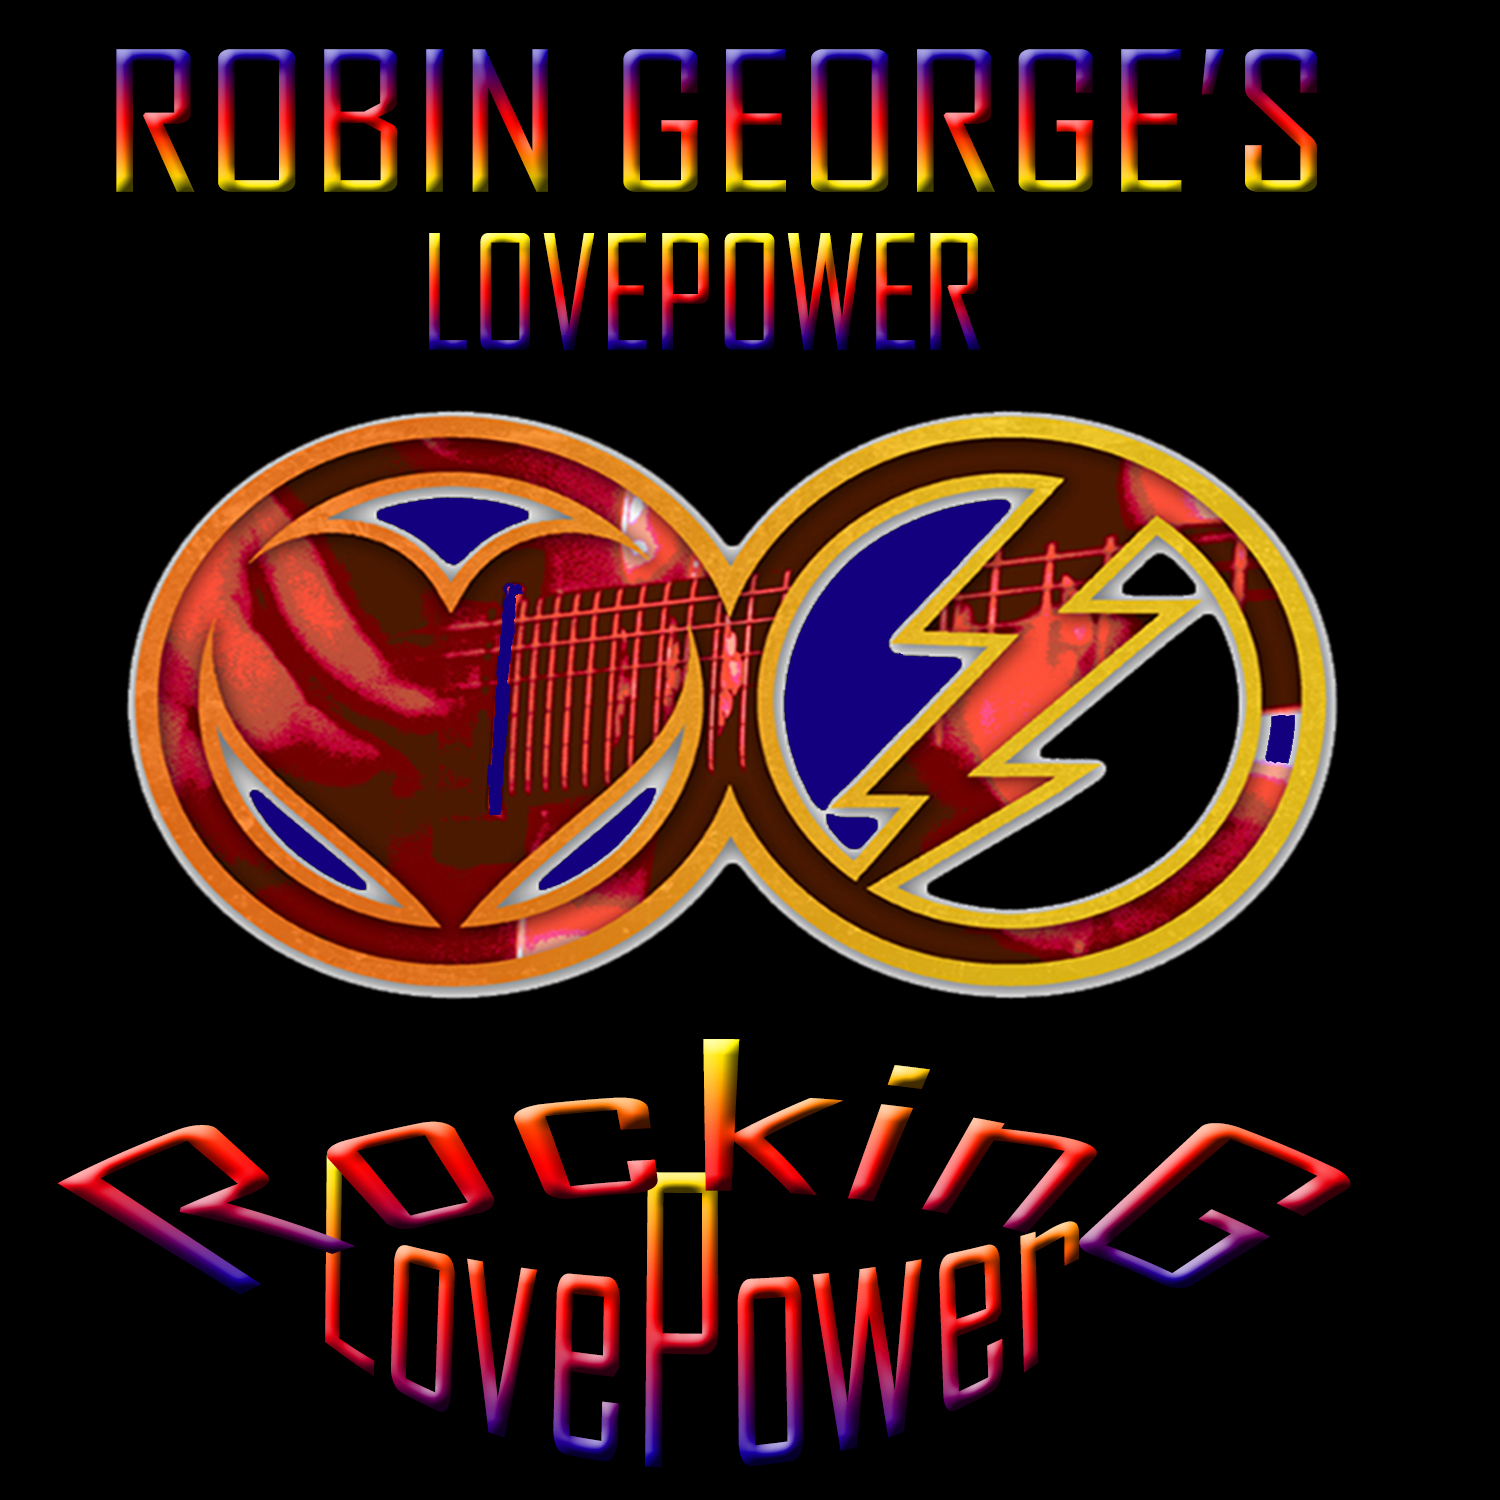 robin george rocking love power